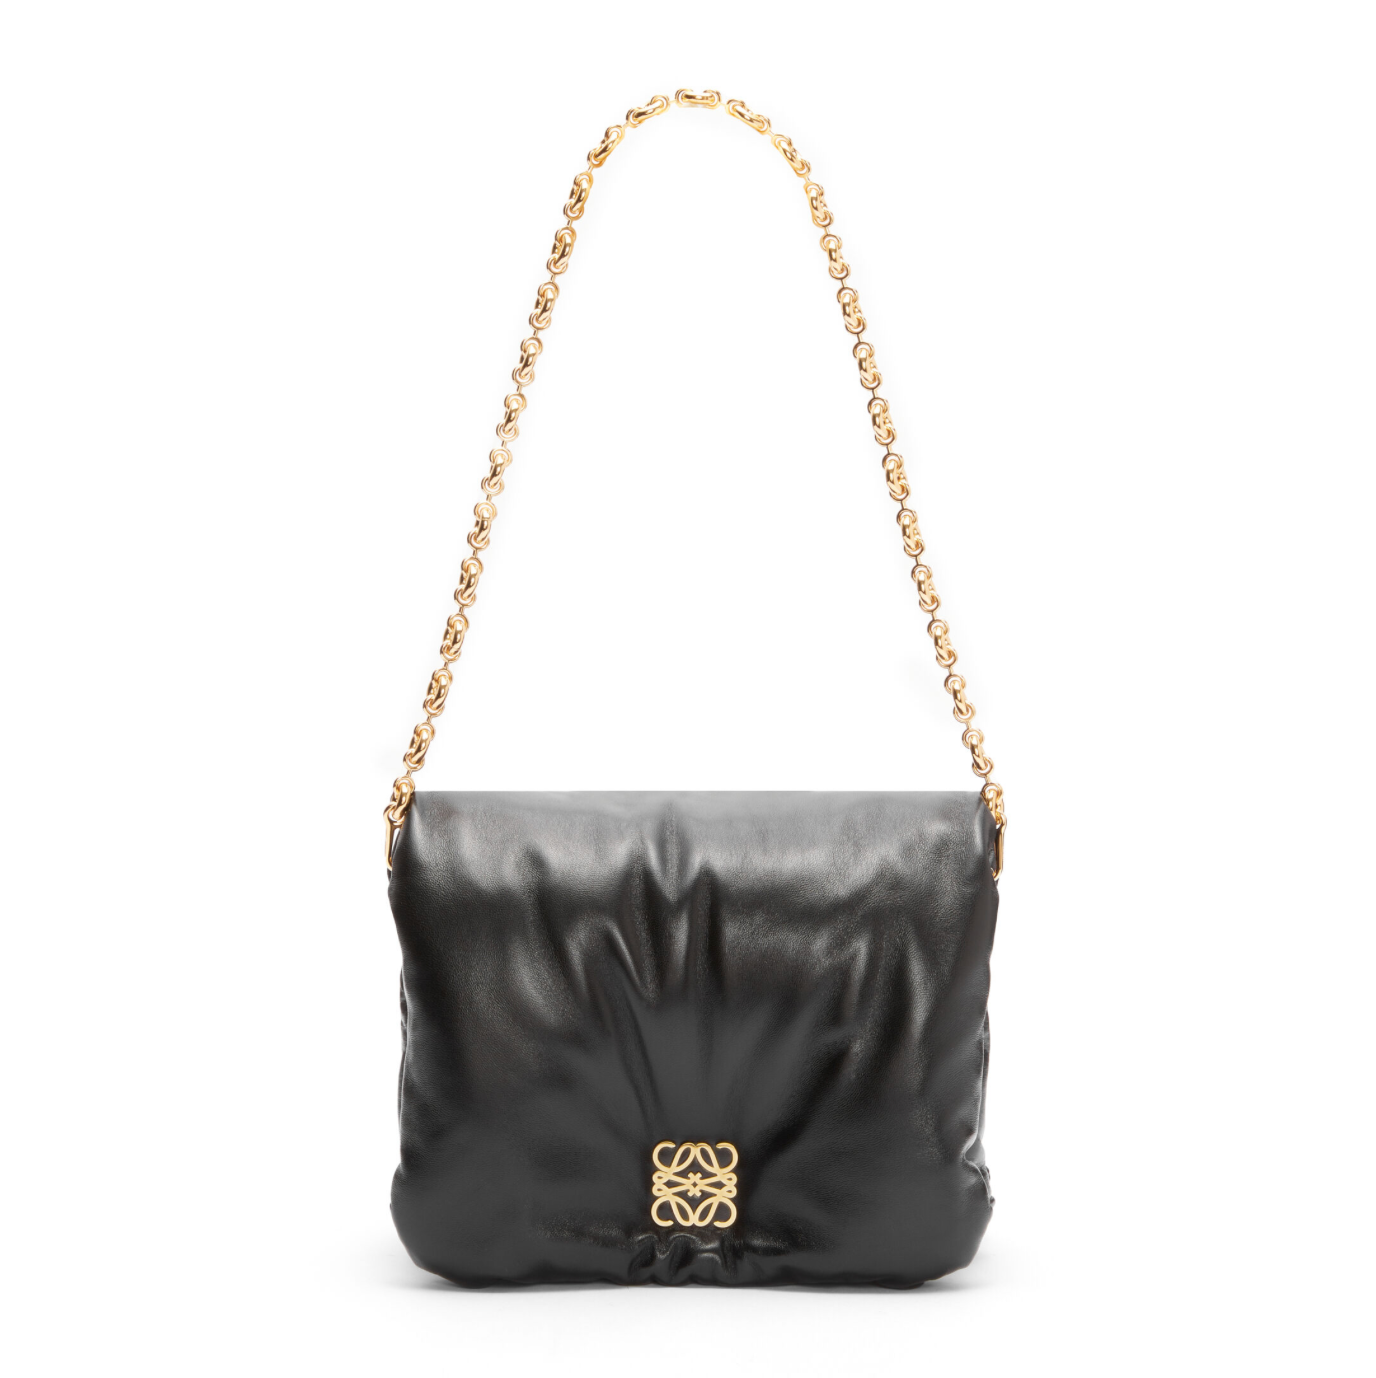 Buy Loewe Puffer Goya bag in black shiny nappa lambskin at the